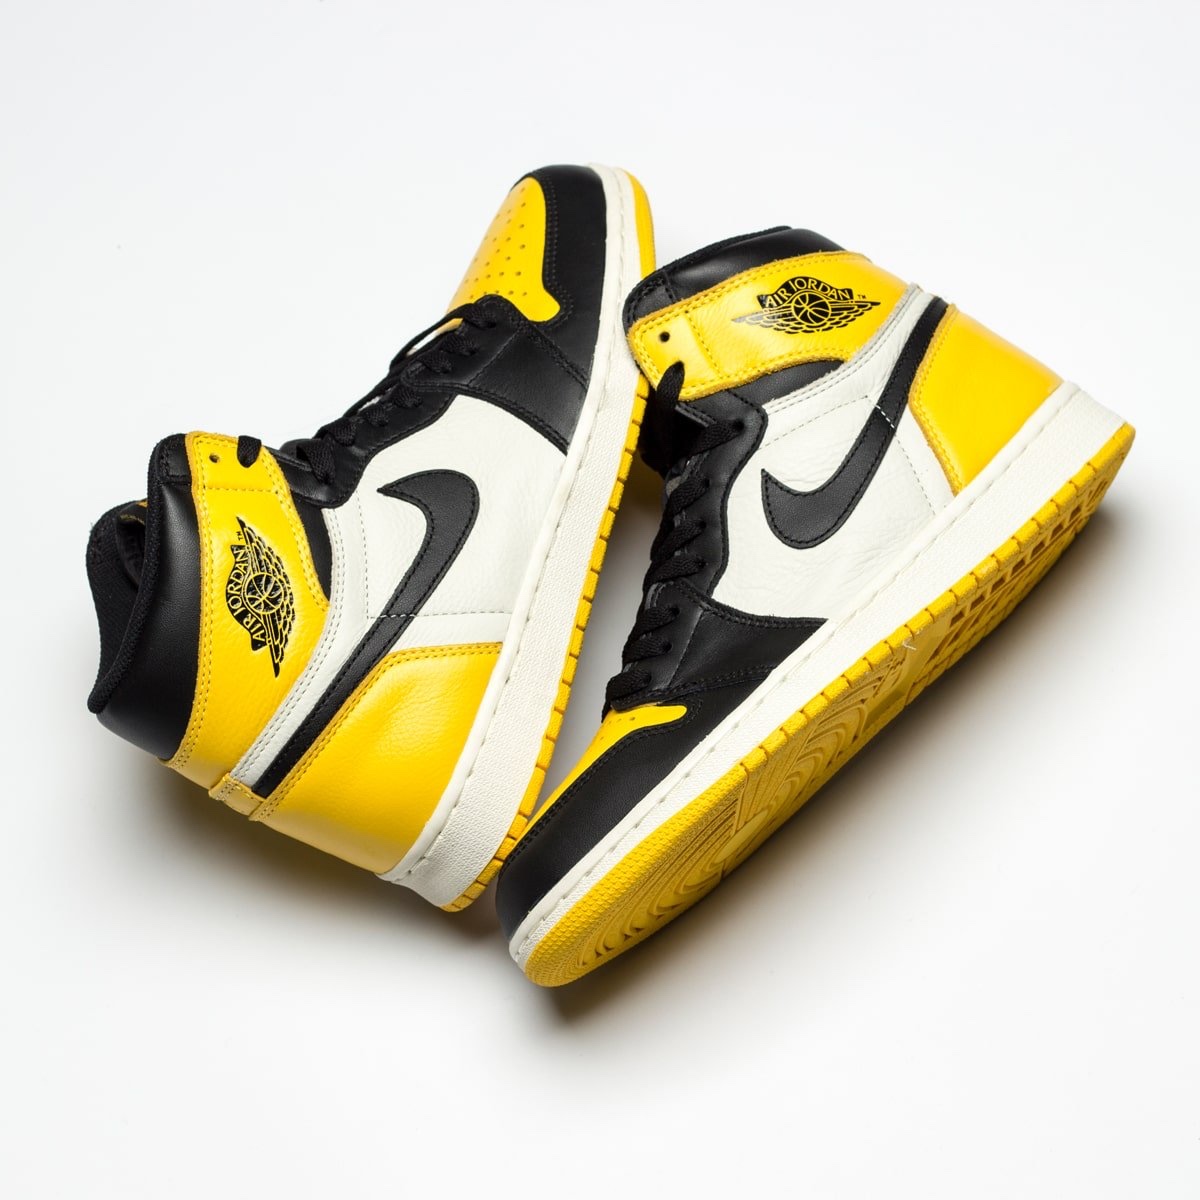 Air Jordan 1 High “Pollen” gialle